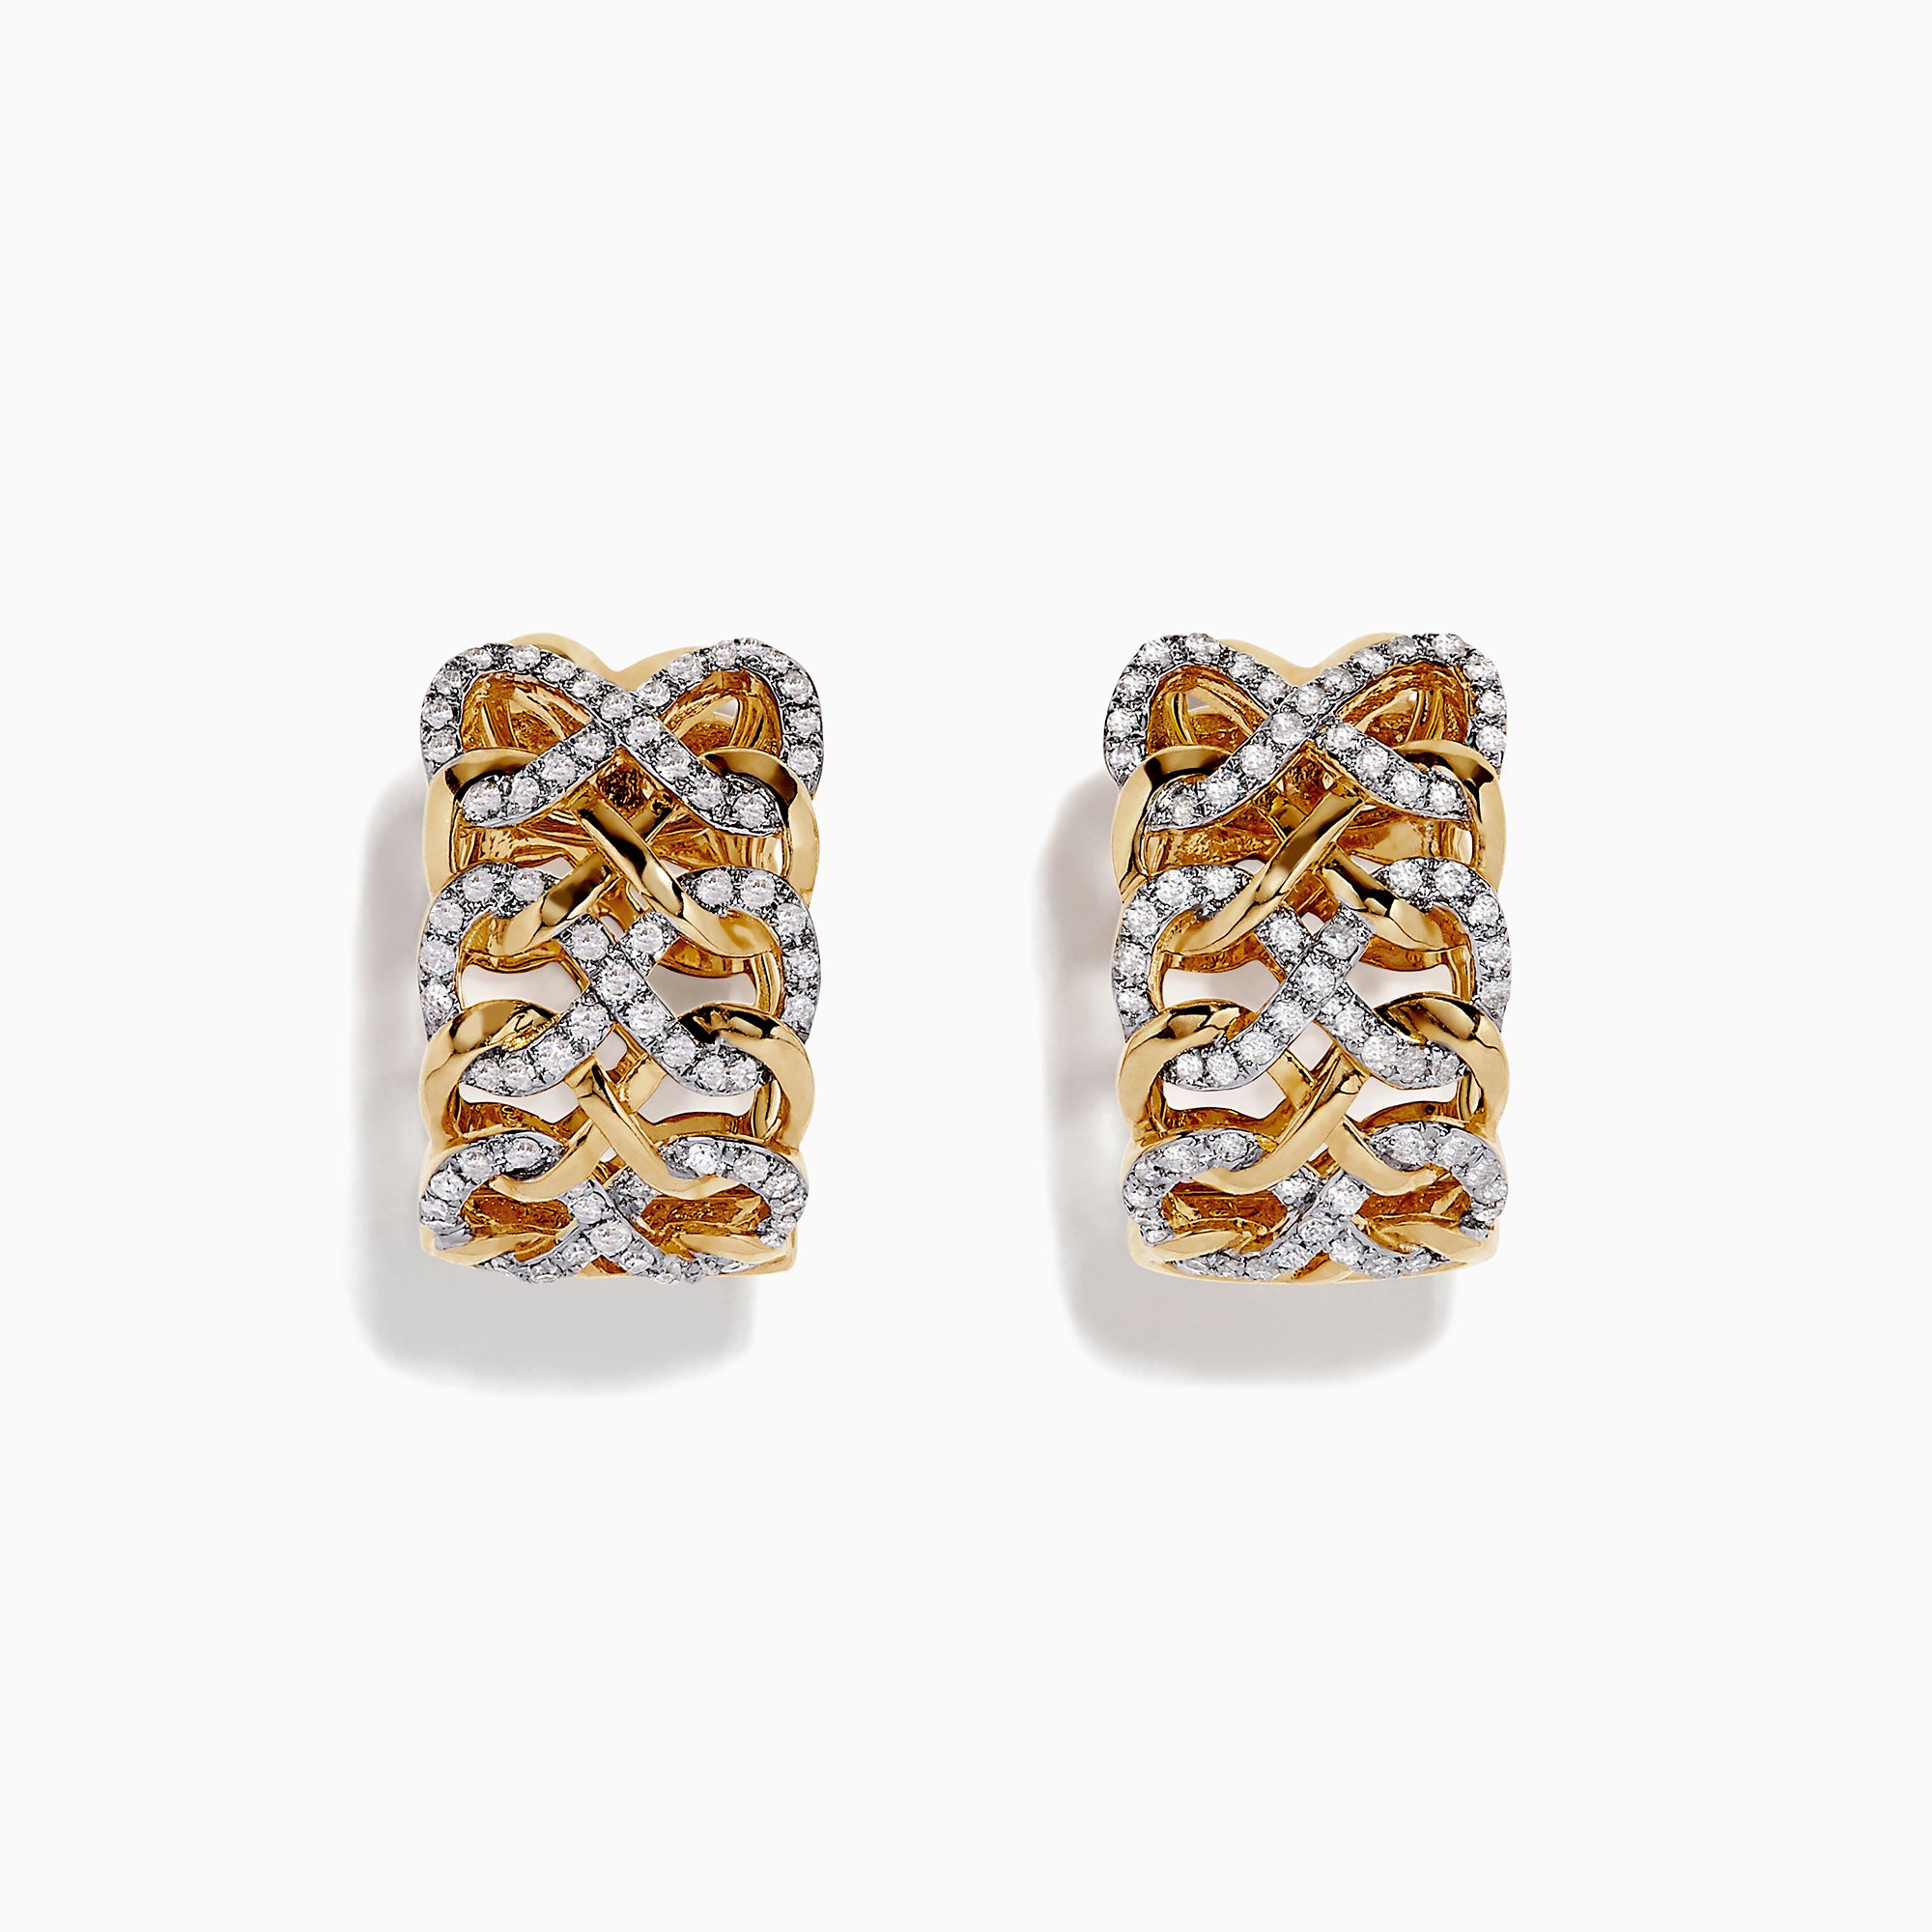 Effy D'oro 14K Yellow Gold Diamond Earrings, 0.48 TCW